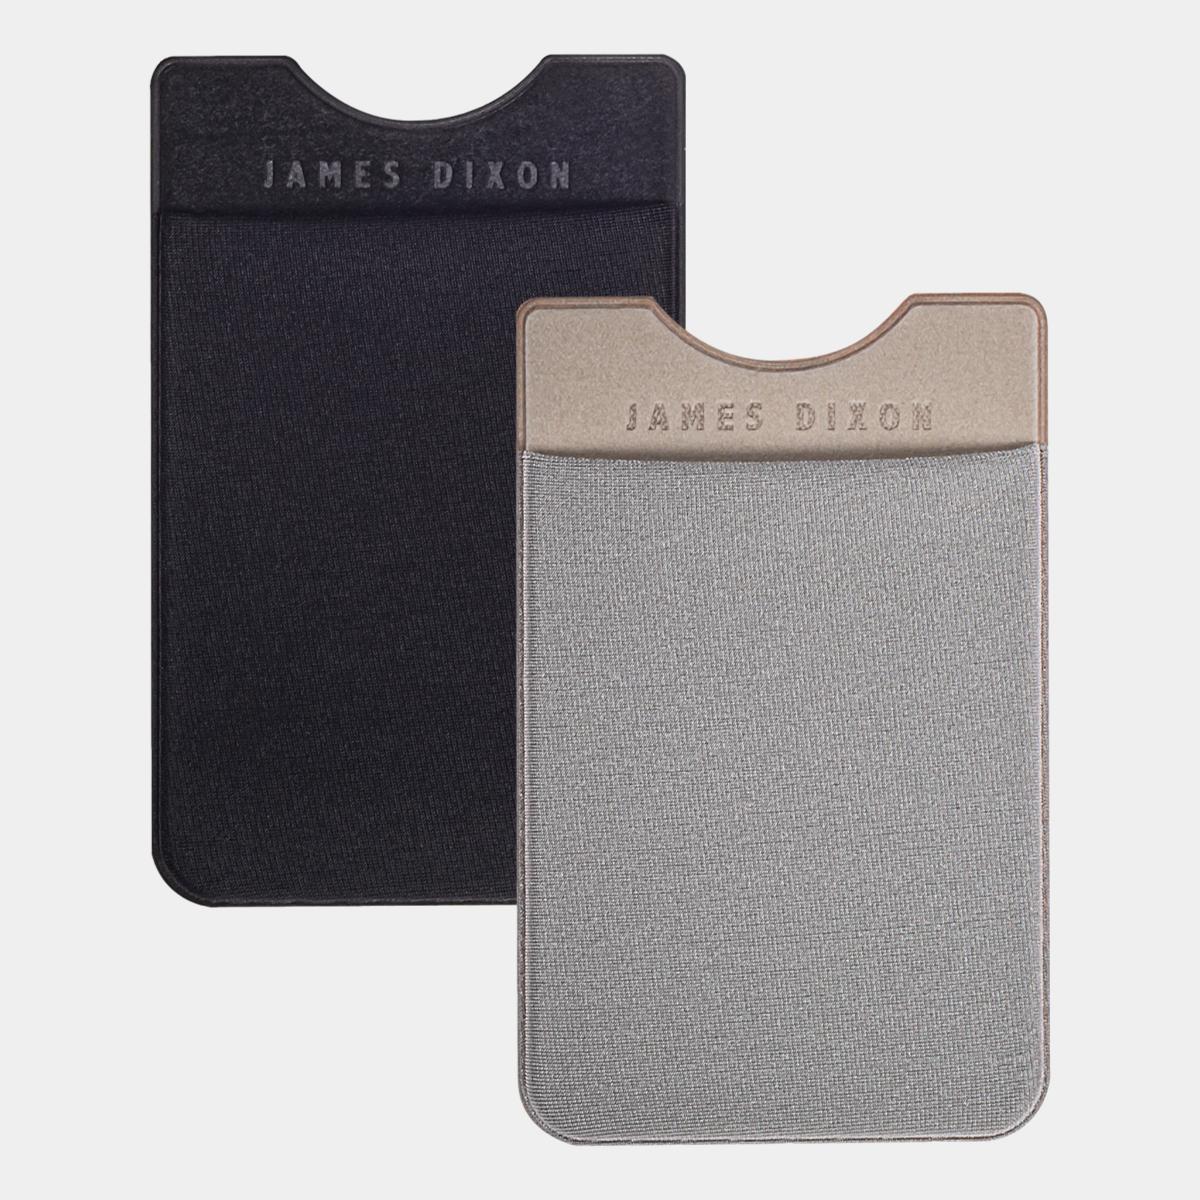 jd0068 james dixon extra cards black grey pocket front